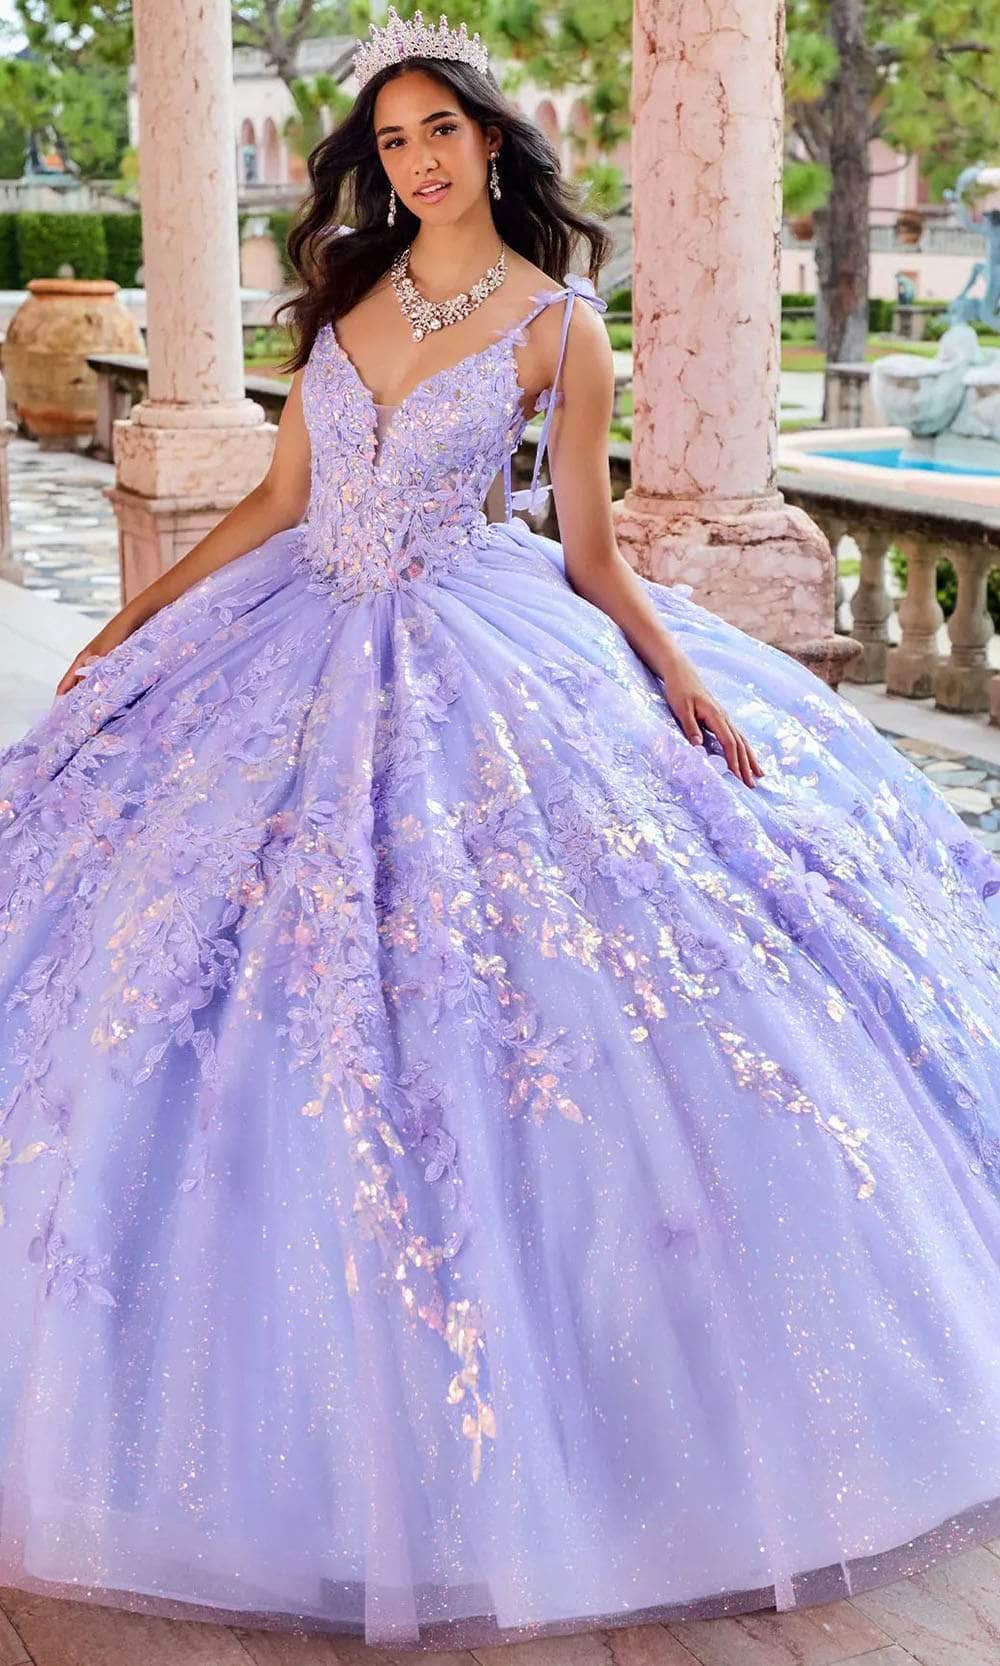 Princesa by Ariana Vara PR30157 - Floral Sleeveless Prom Gown
